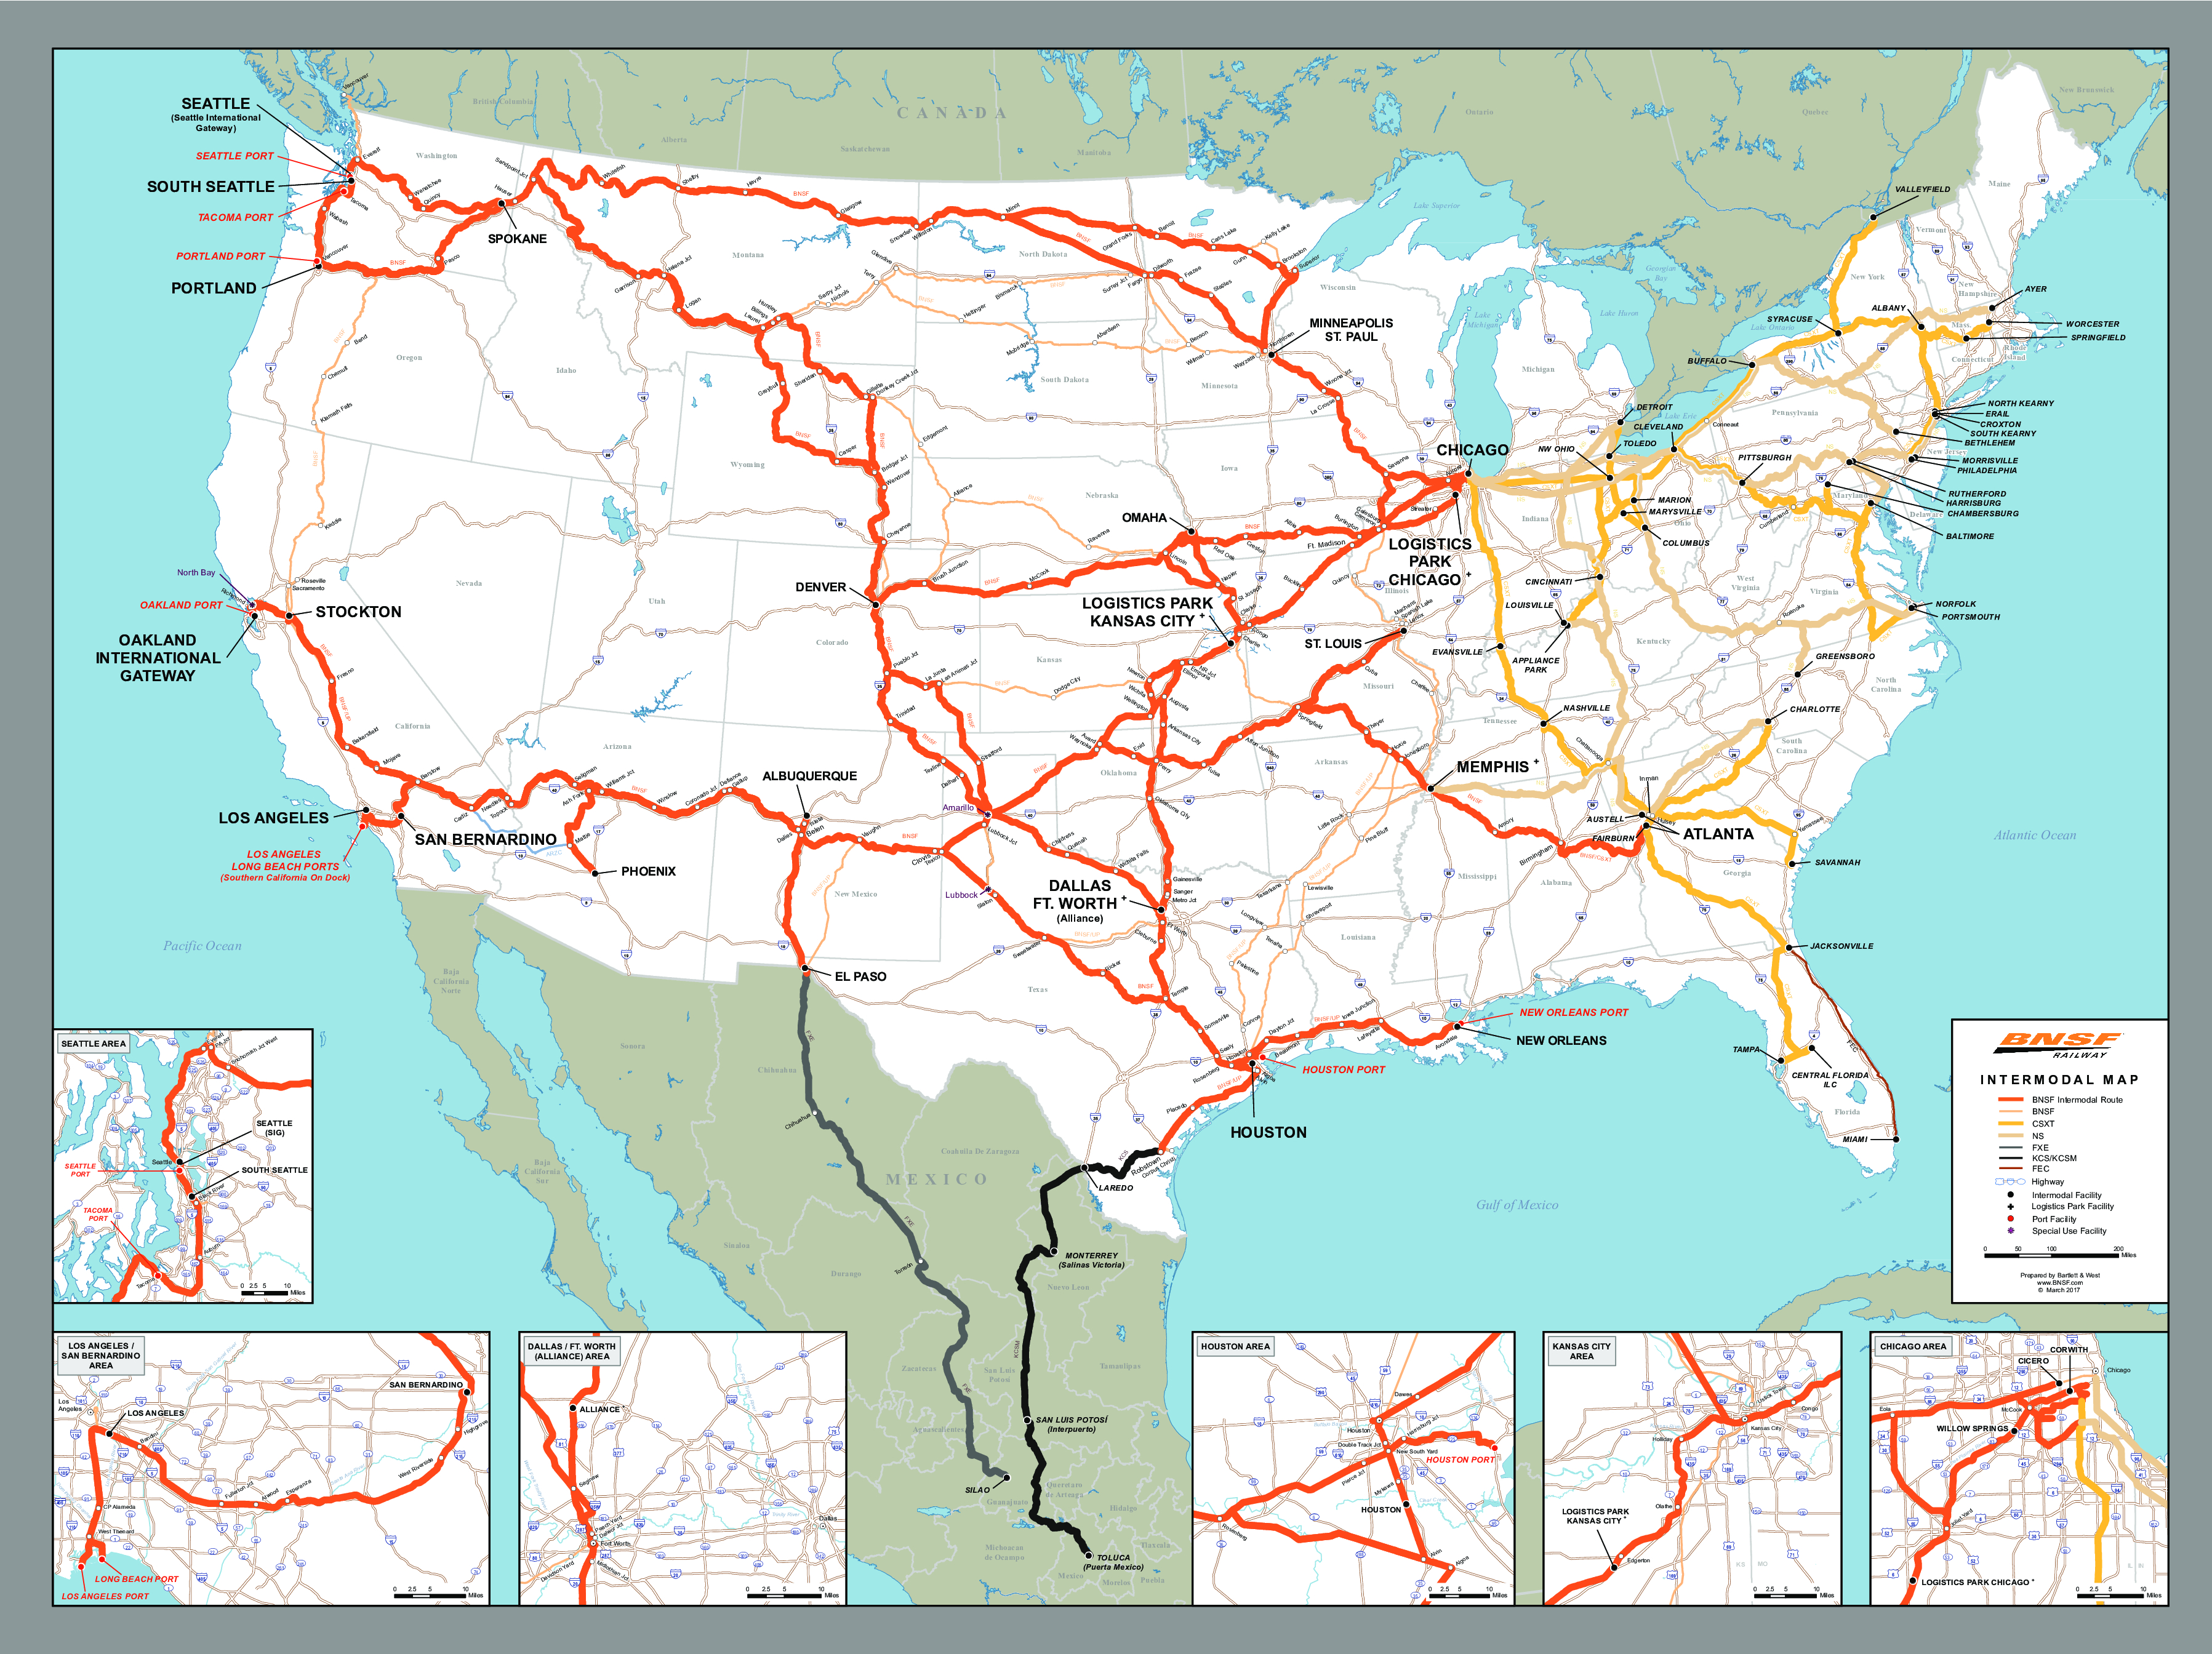 Rail Network Maps | Bnsf - Map Of Texas Showing Santa Fe